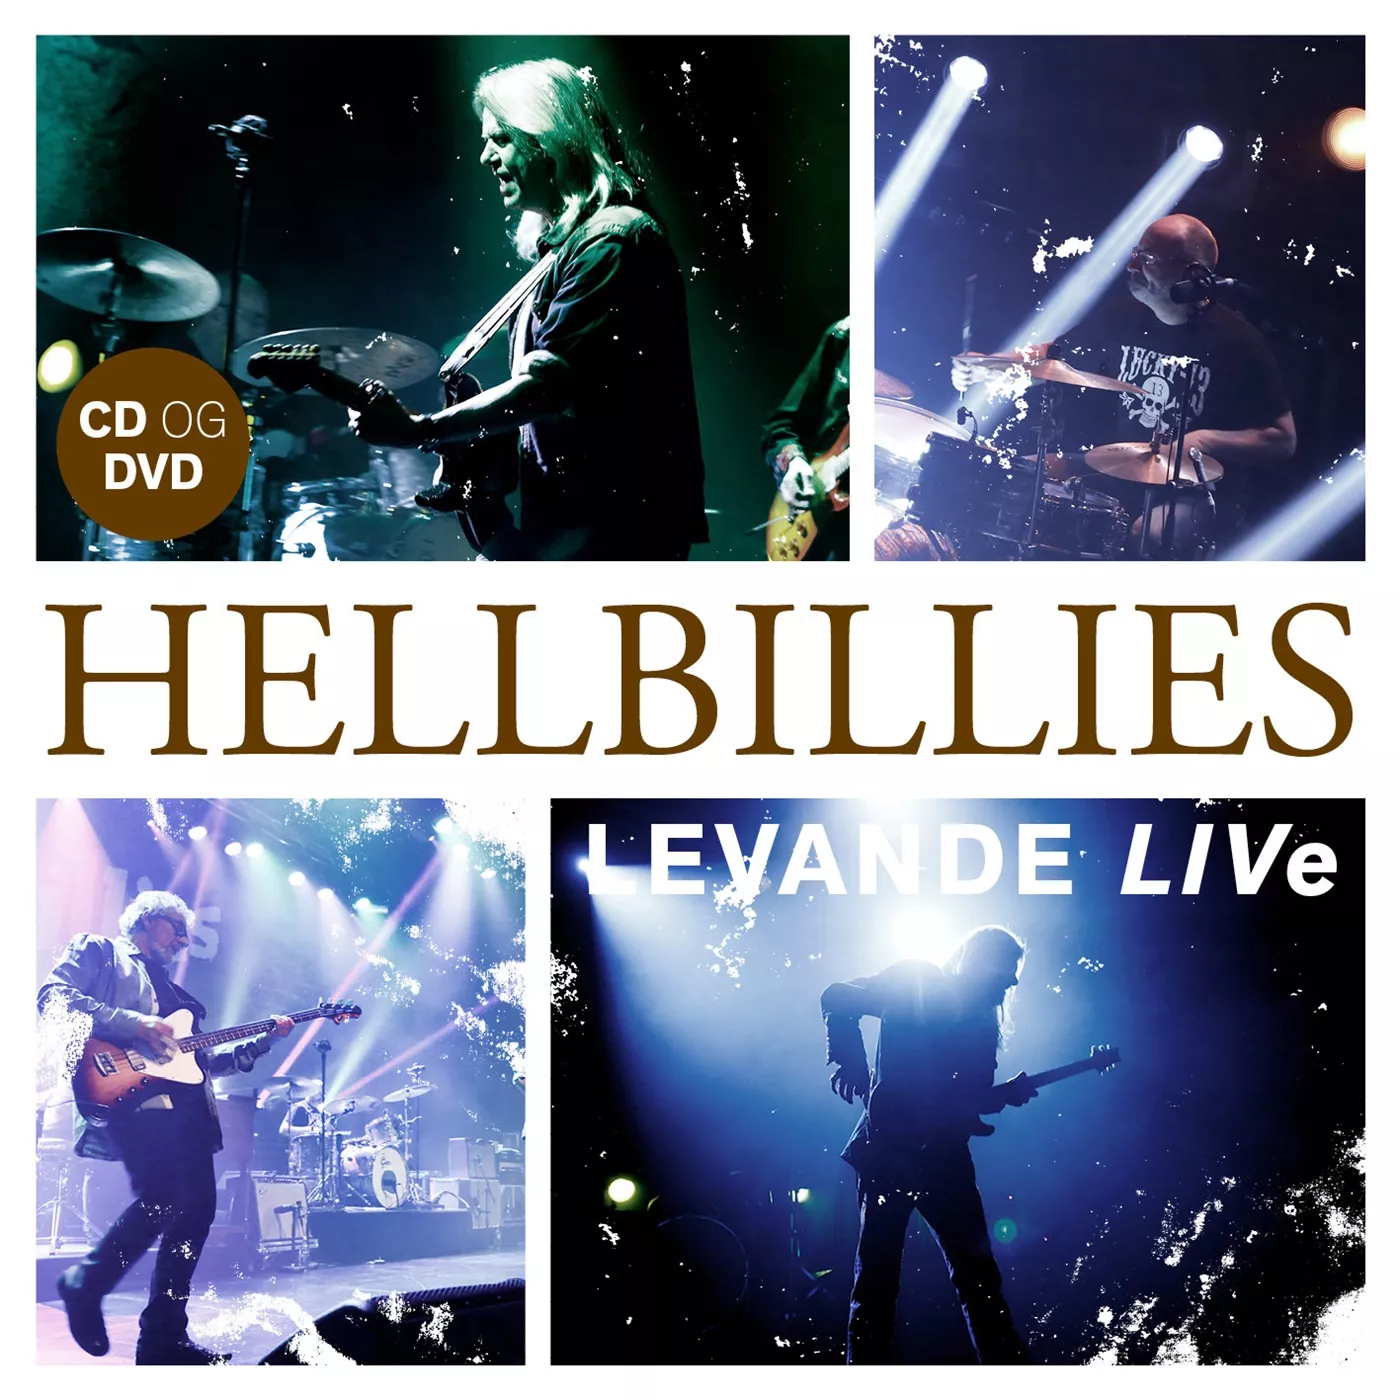 Levande LIVe - Hellbillies